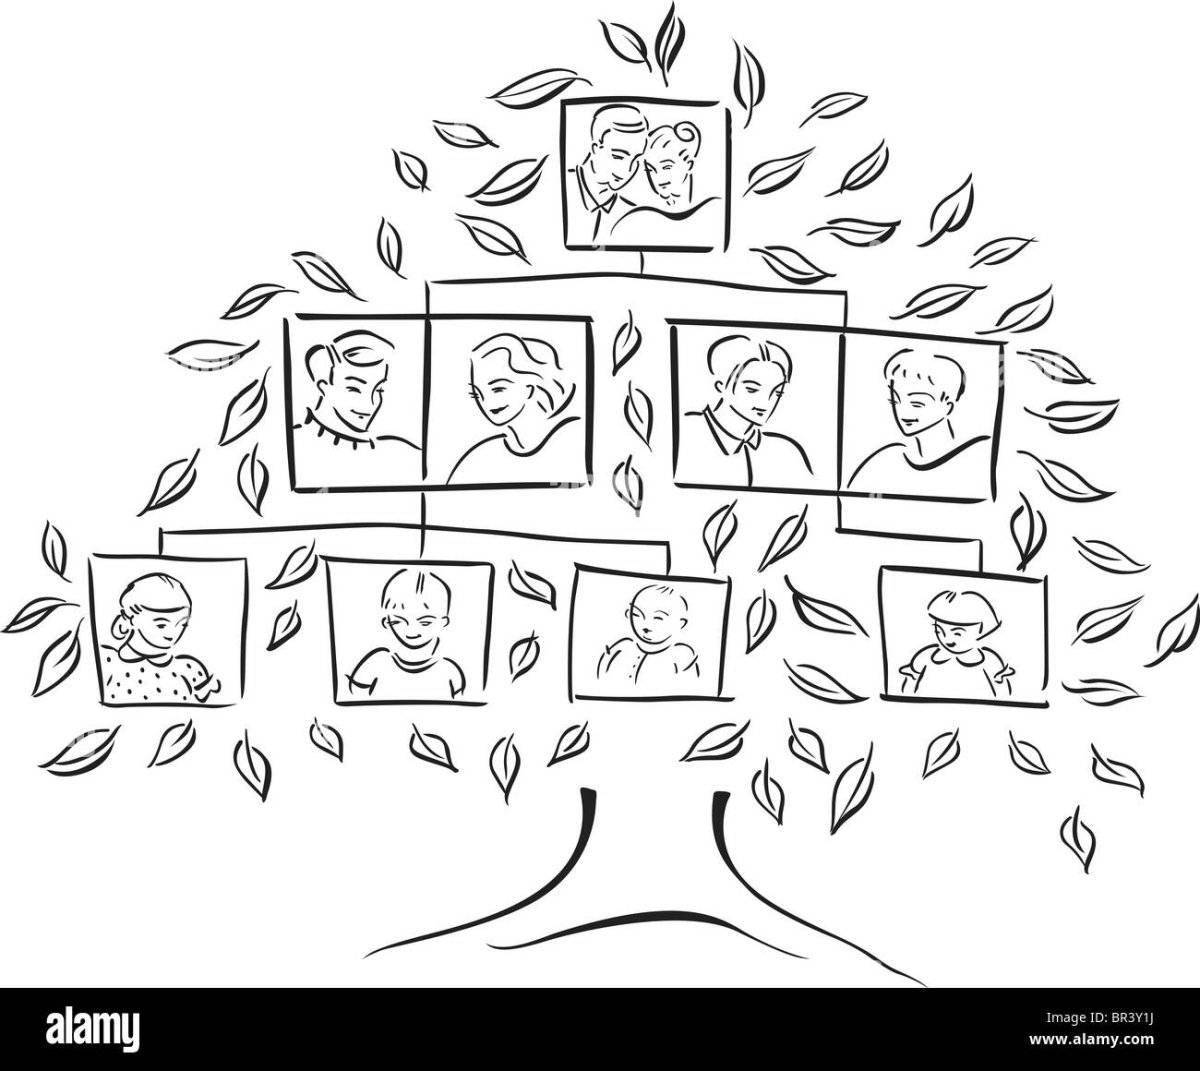 Забавная раскраска «семейное древо»